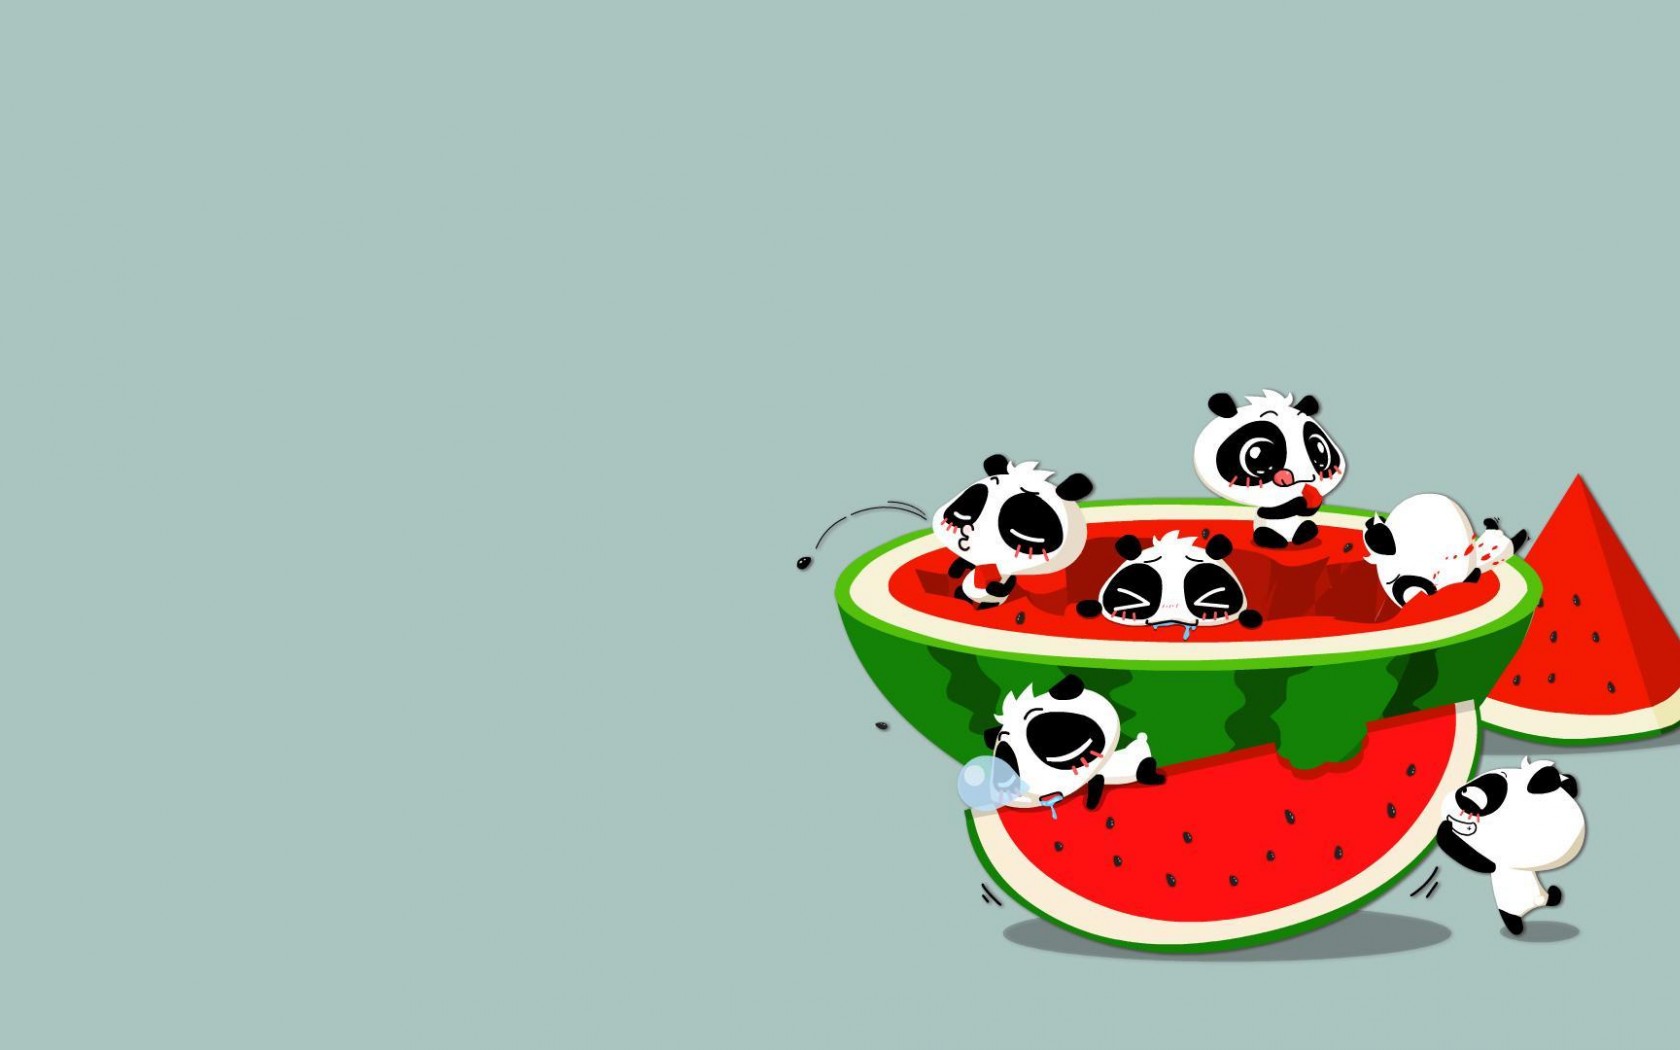 Wallpaper Watermelon Panda Funny Pictures Best Jokes